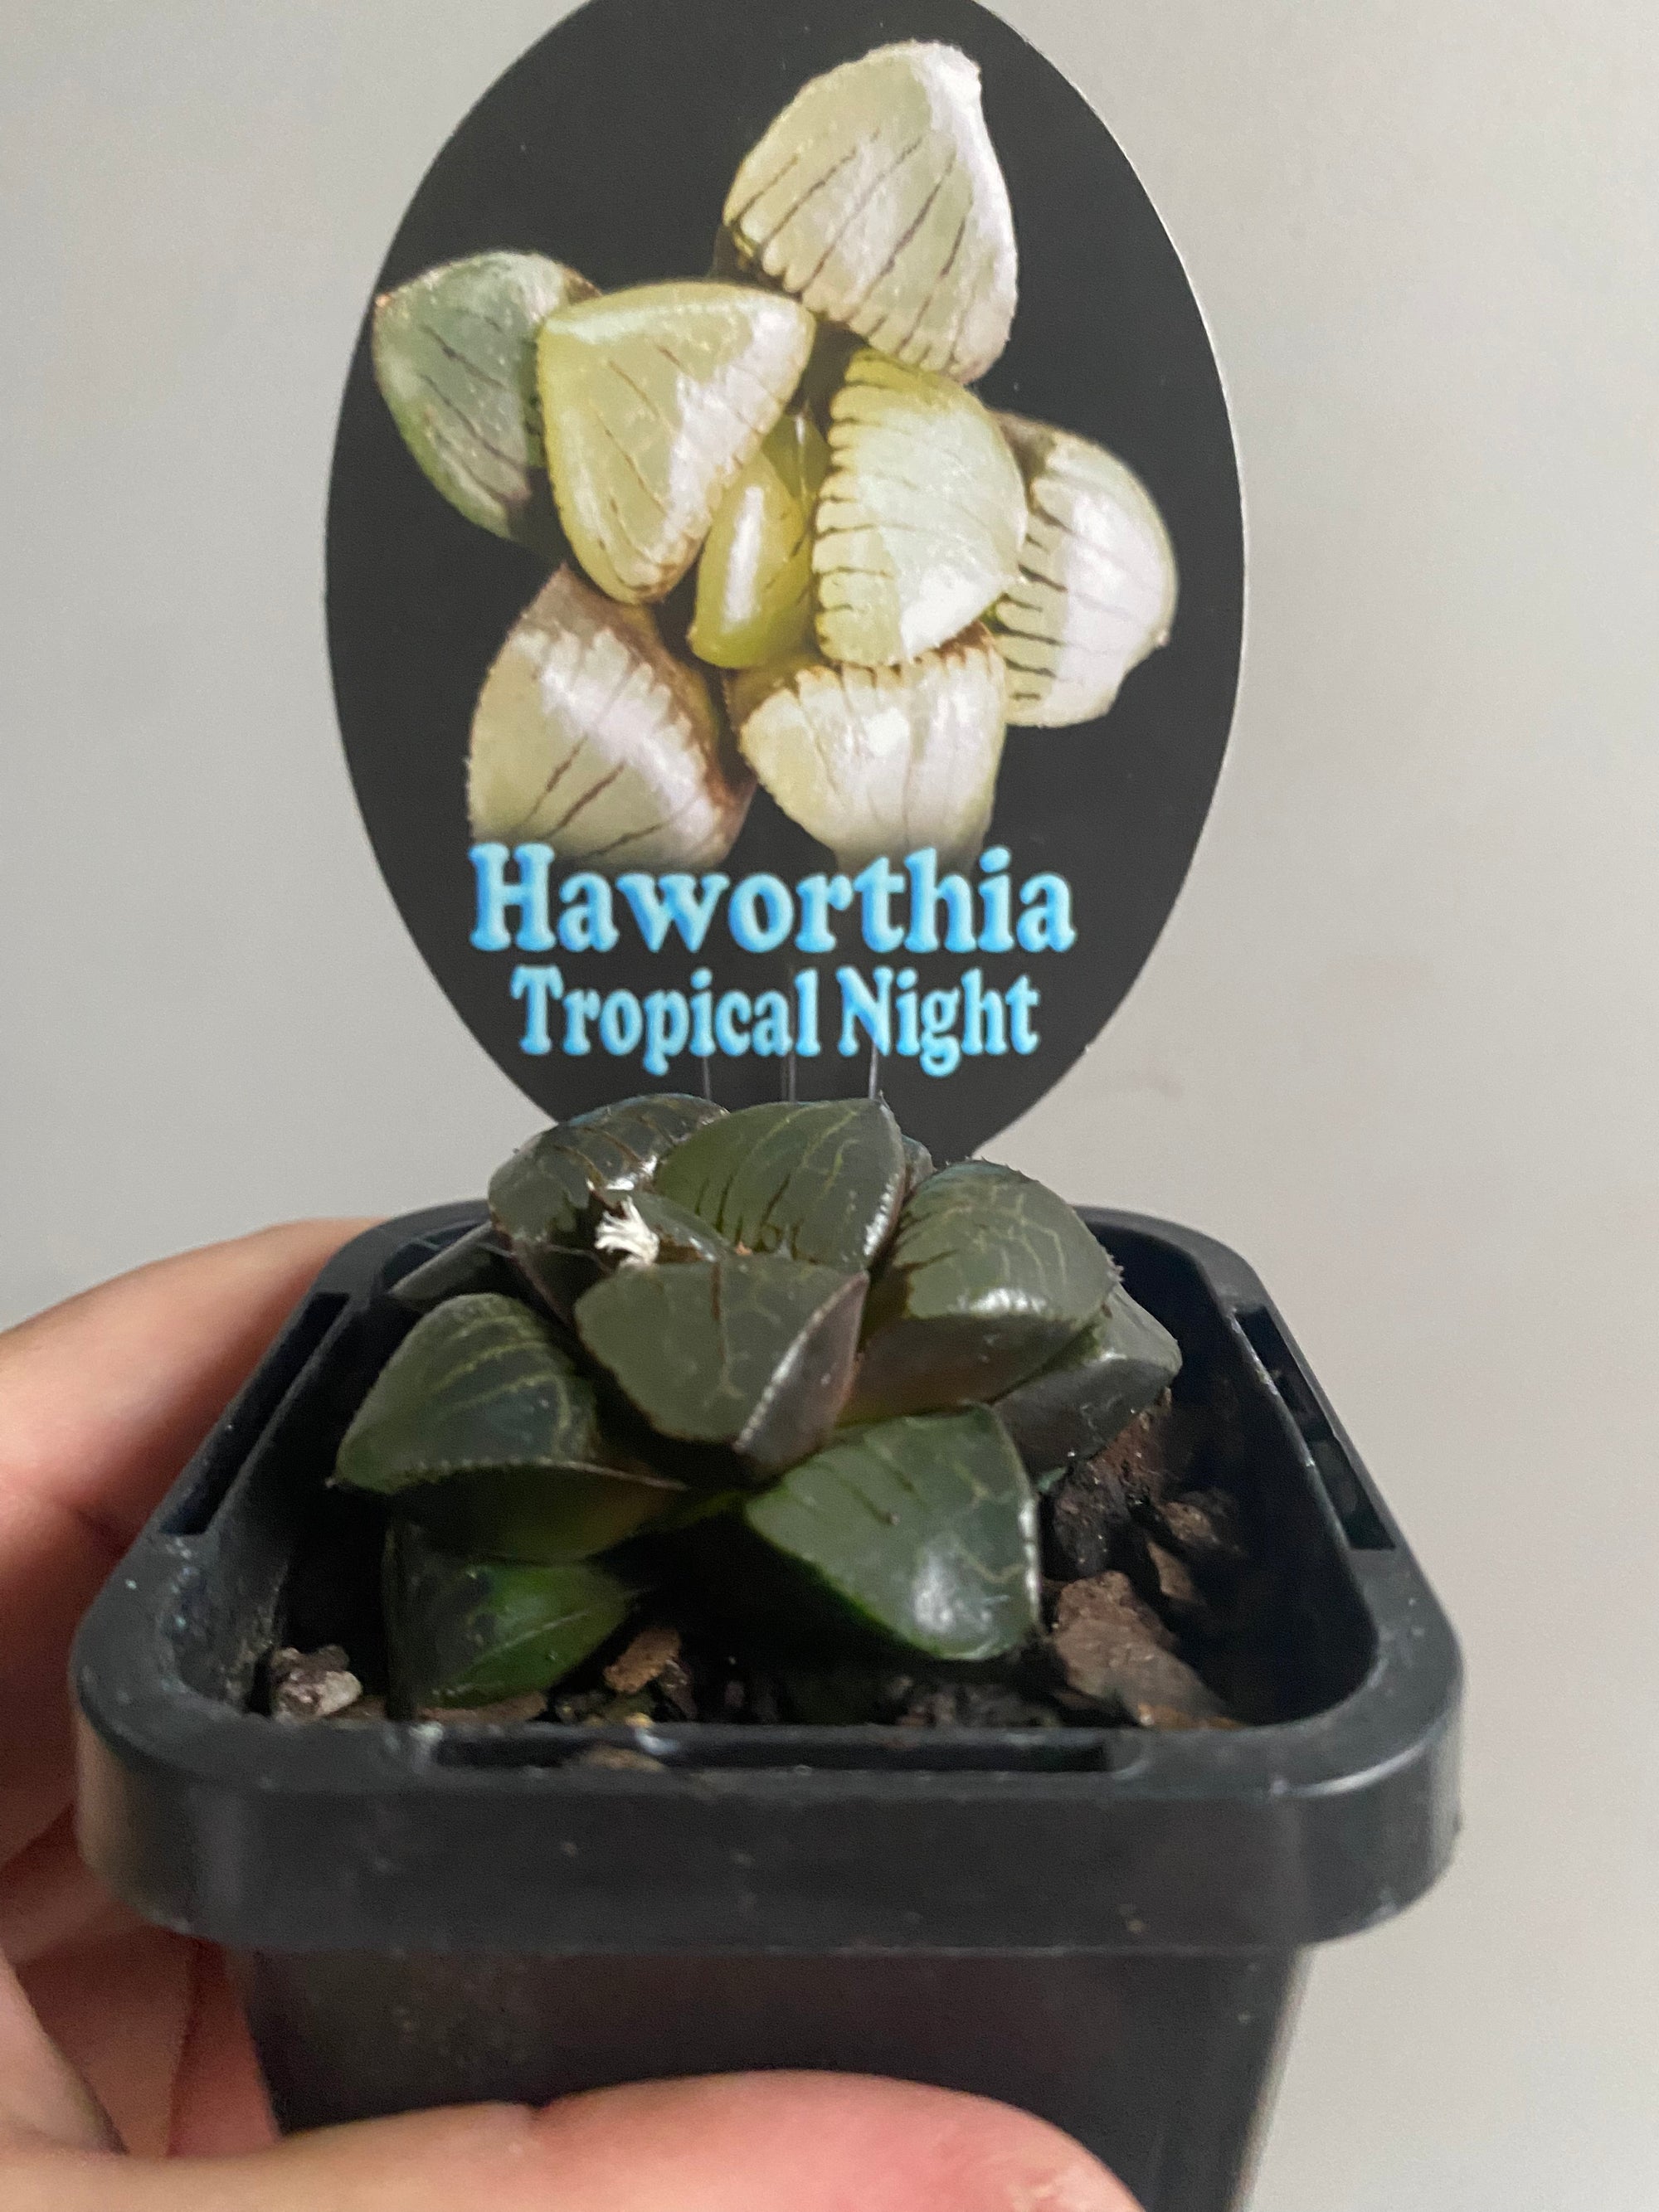 Haworthia 'Tropical Night'